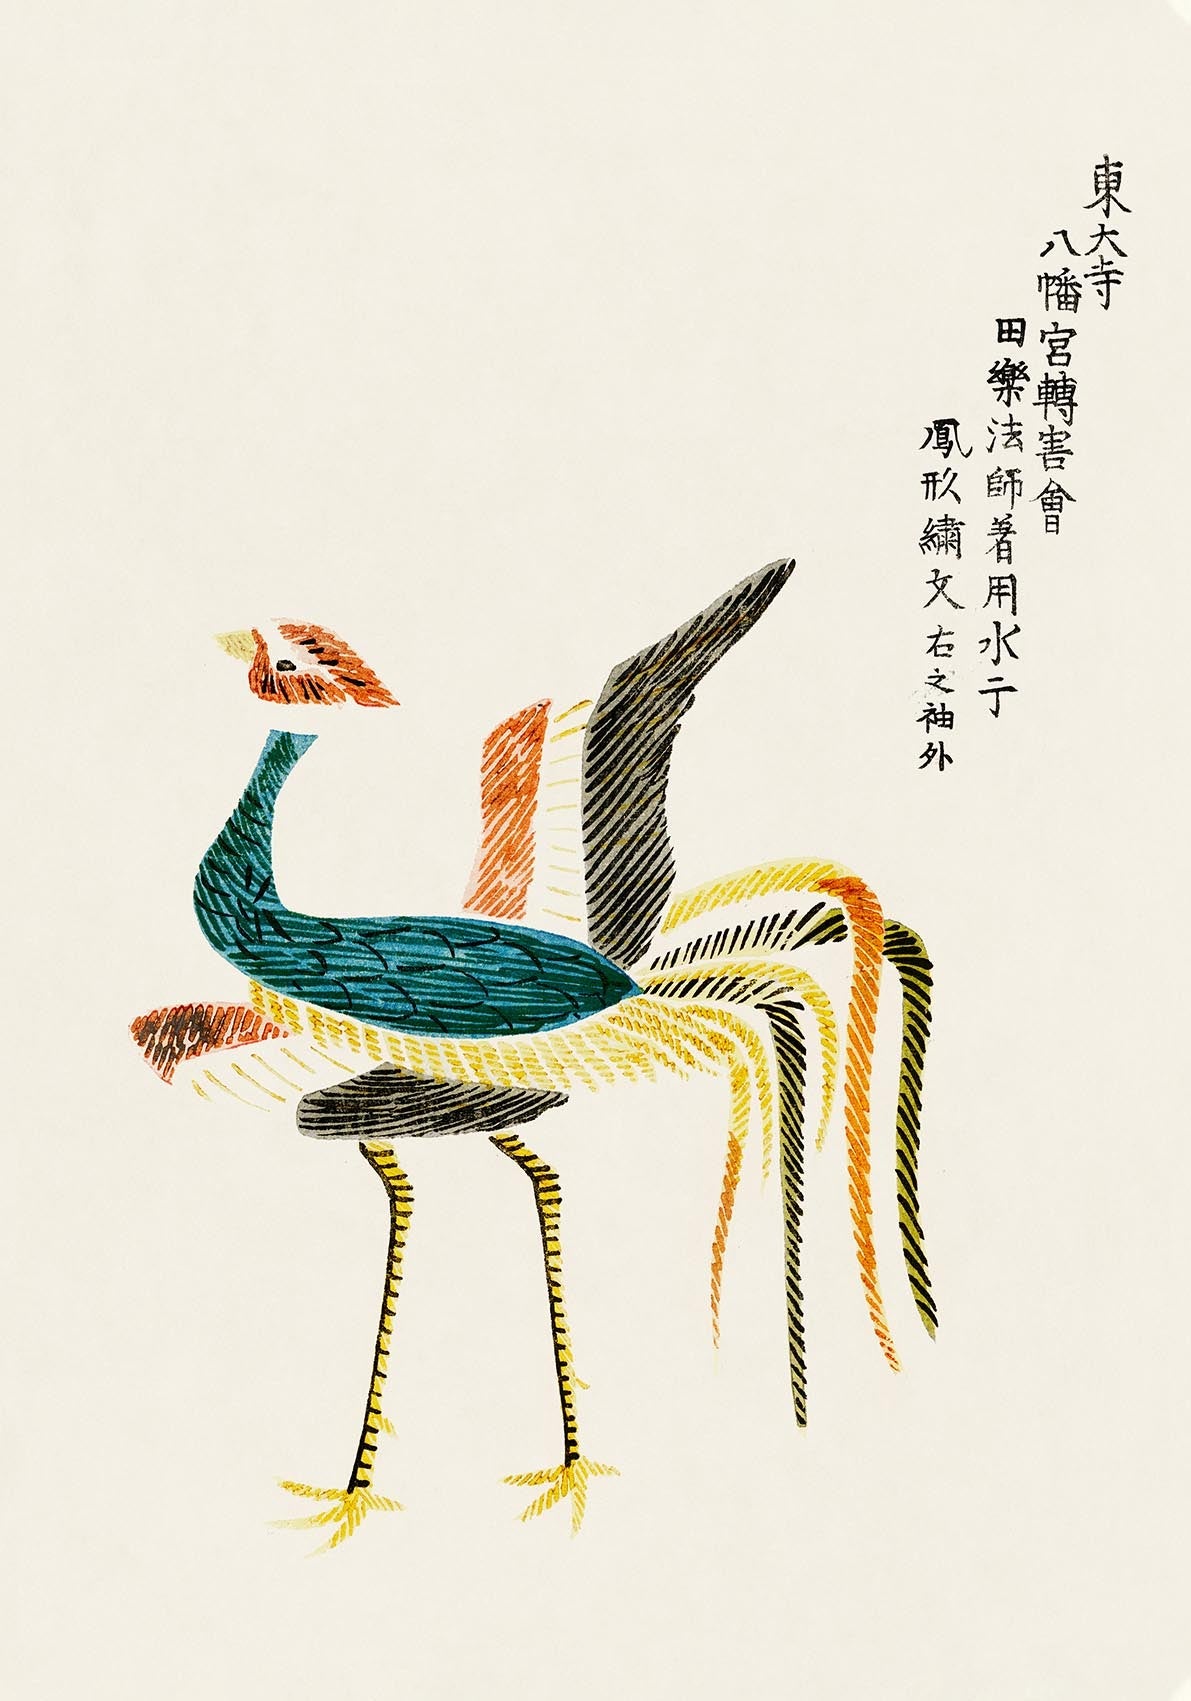 Japanese Cranes by Taguchi Tomoki No. 3